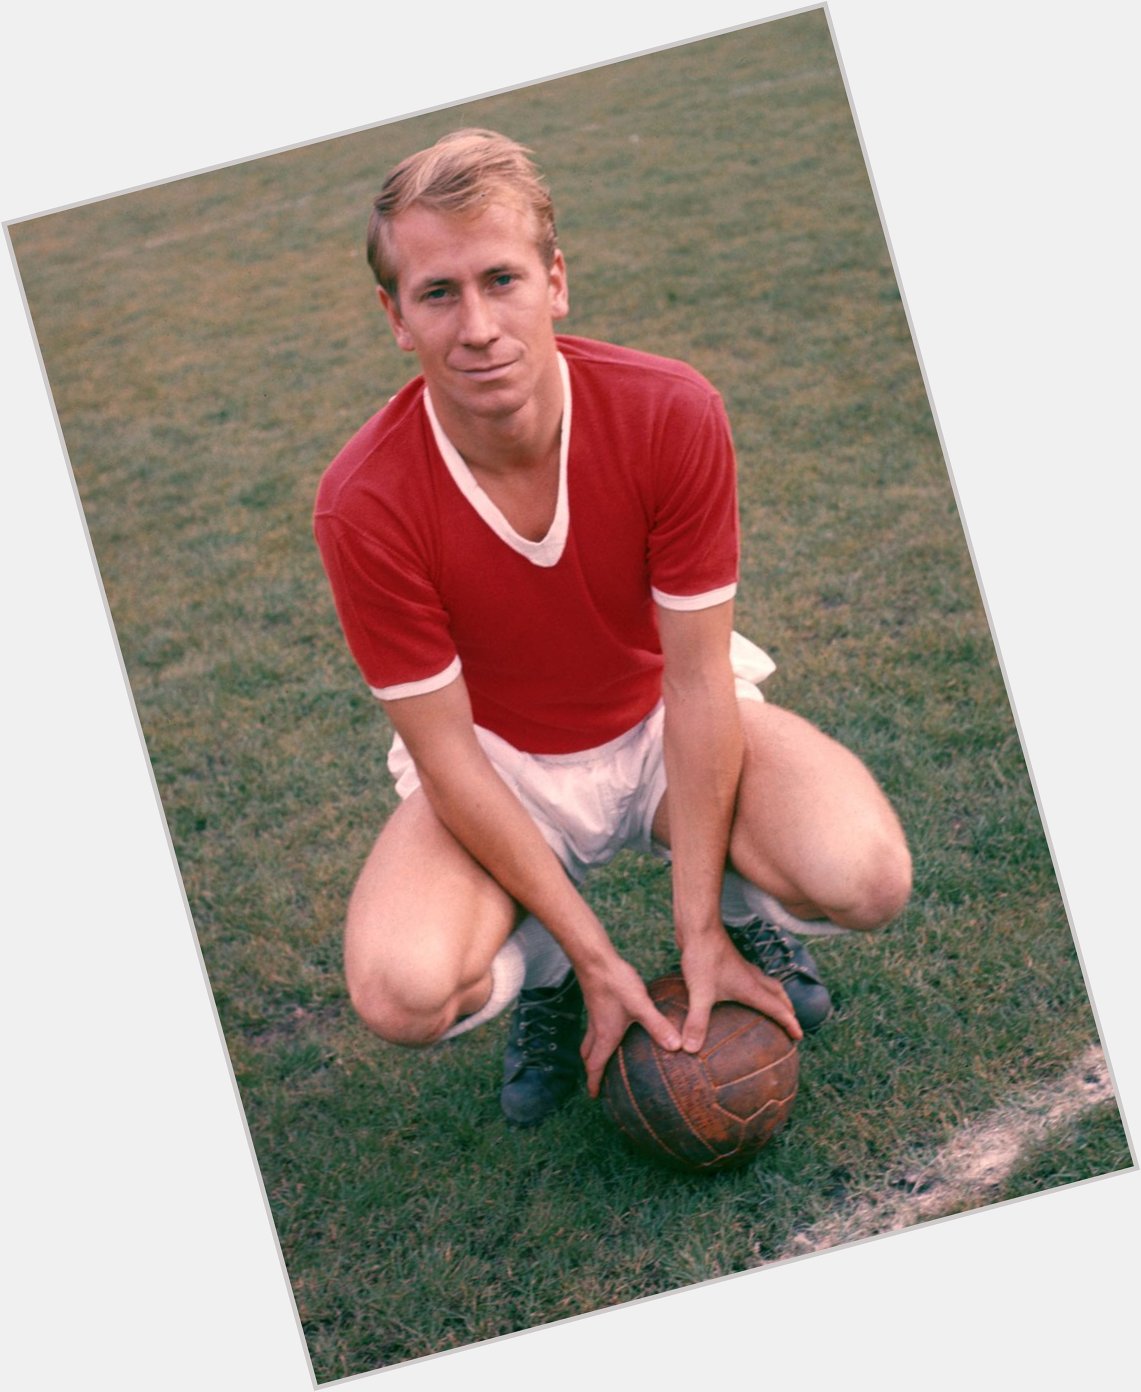 Happy 84th birthday to and Engladn legend Bobby Charlton 